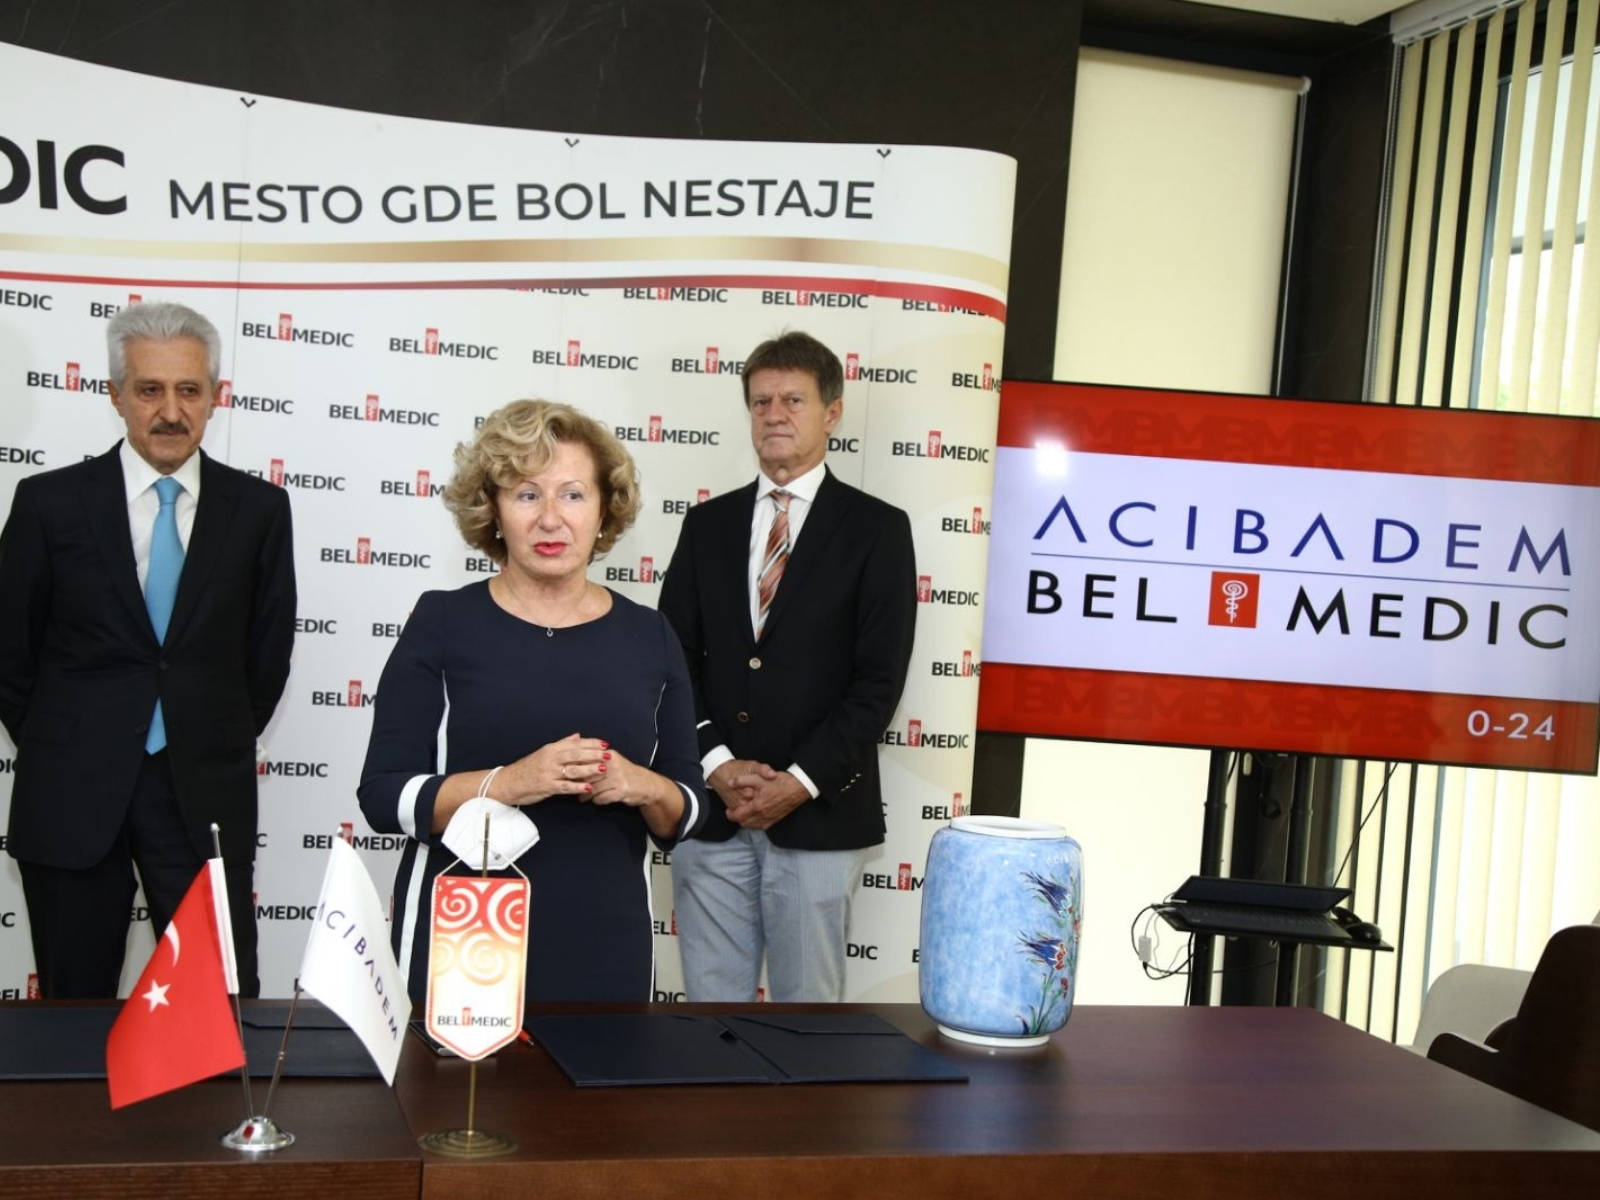 Zvanično: integrisani turski i srpski medicinski sistemi Acibadem i Bel Medic